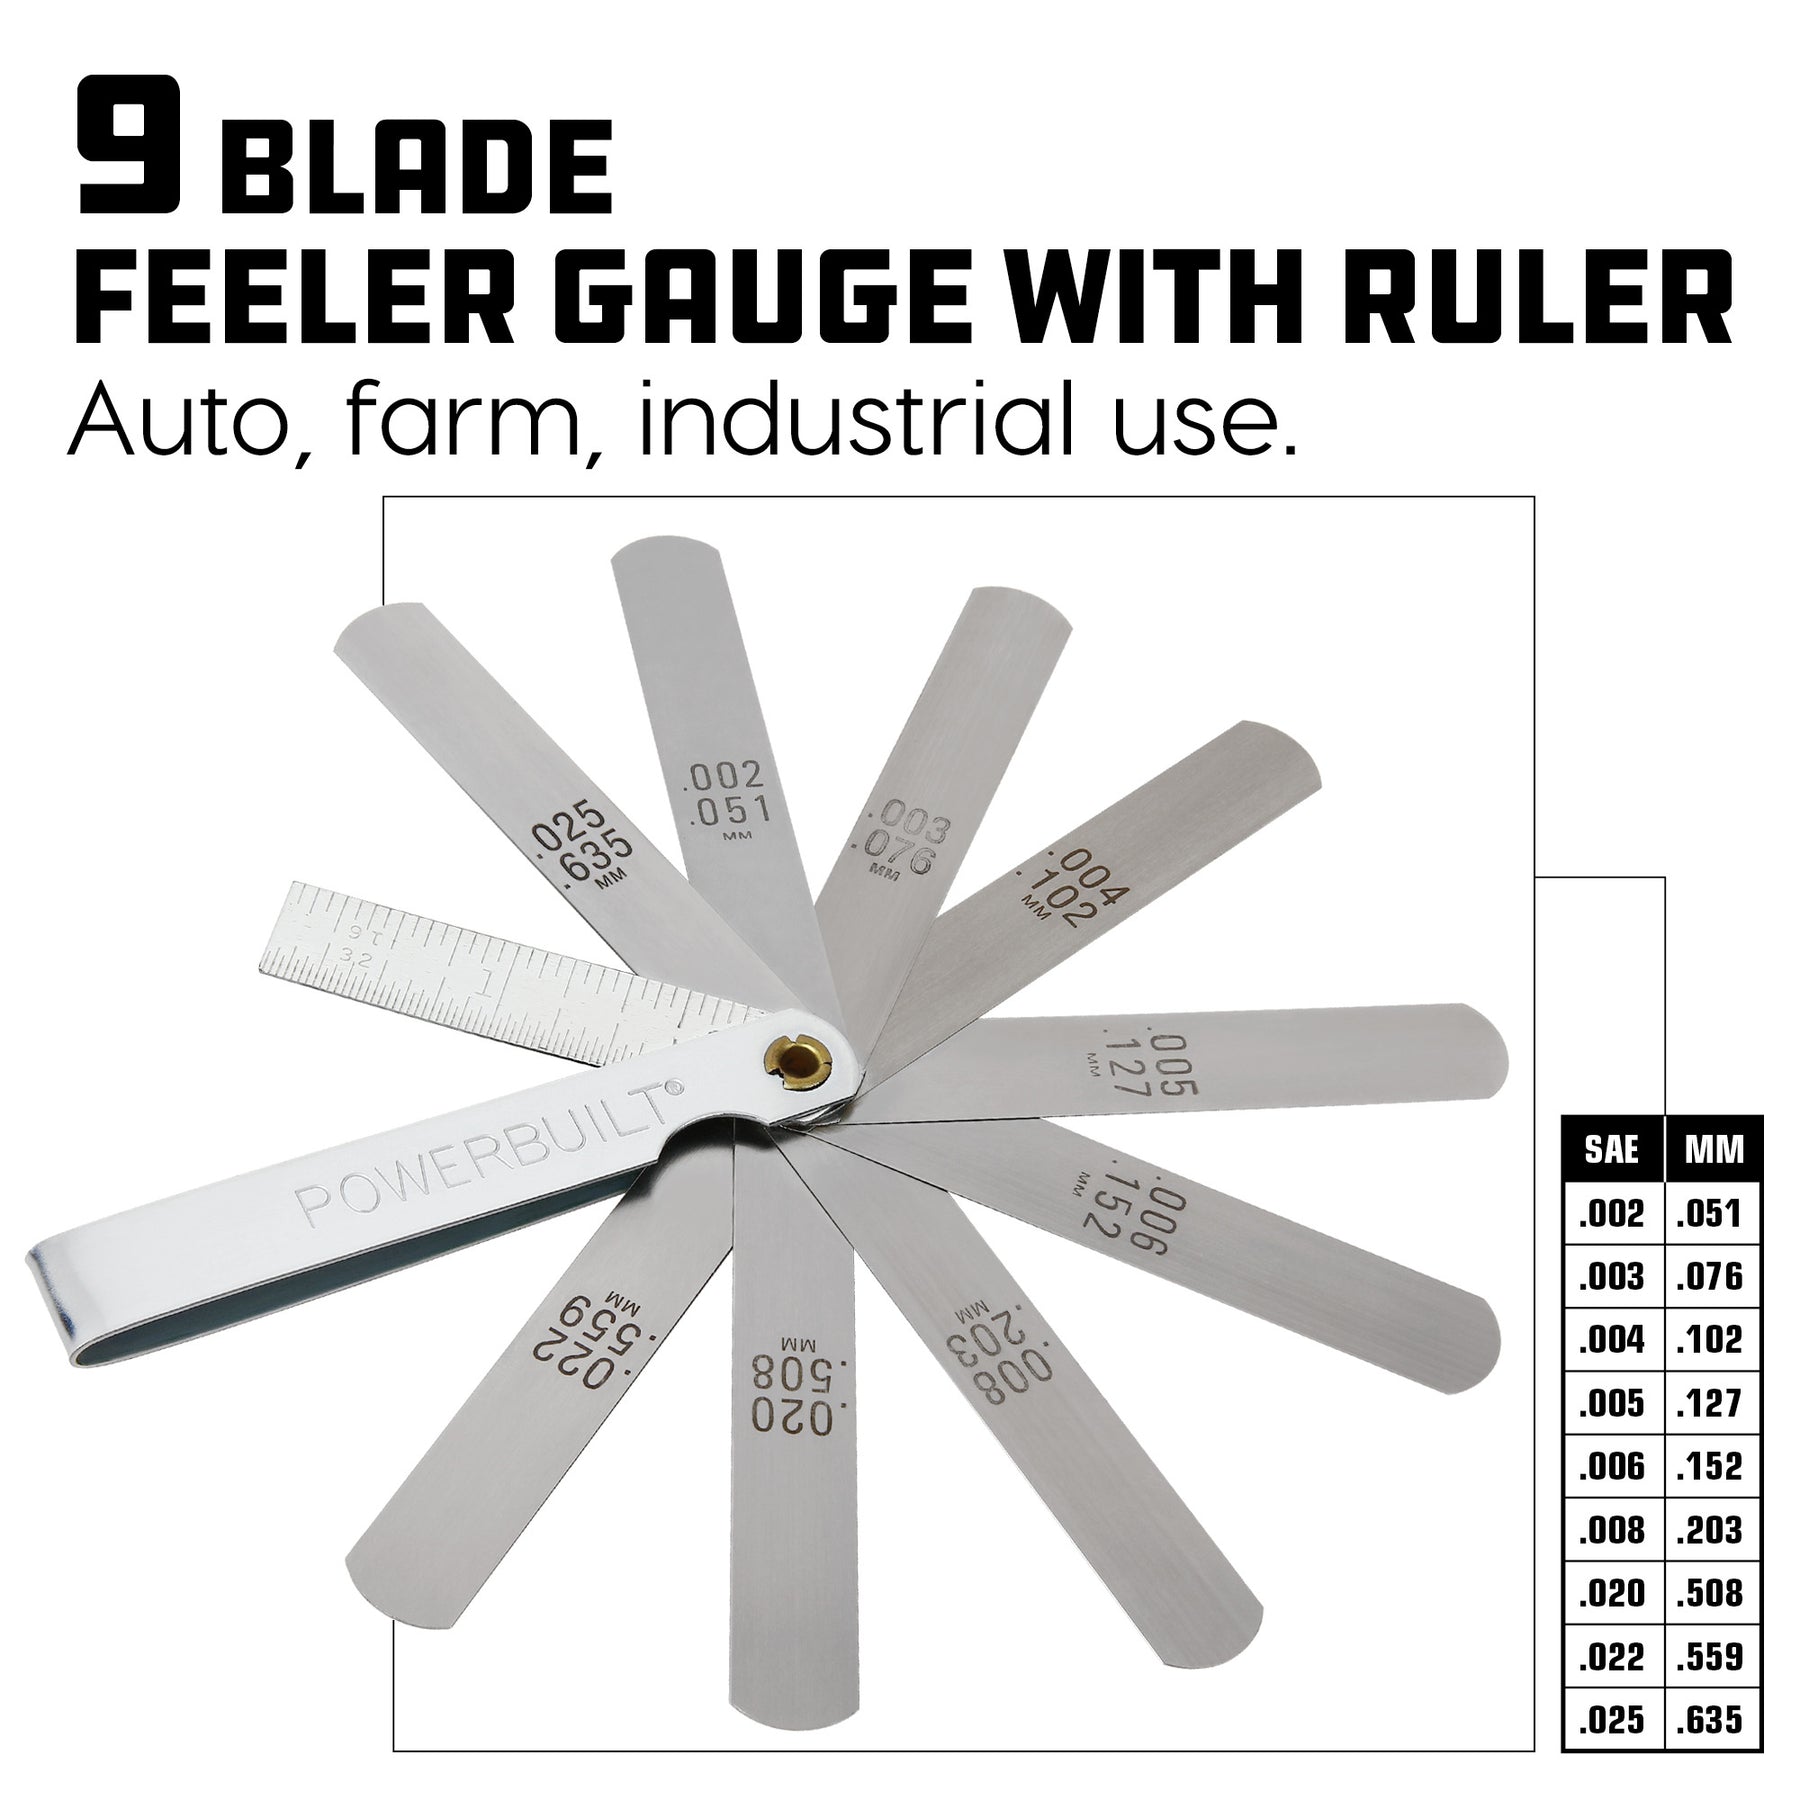 Powerbuilt 9 Blade Feeler Gauge And Ruler - 648514